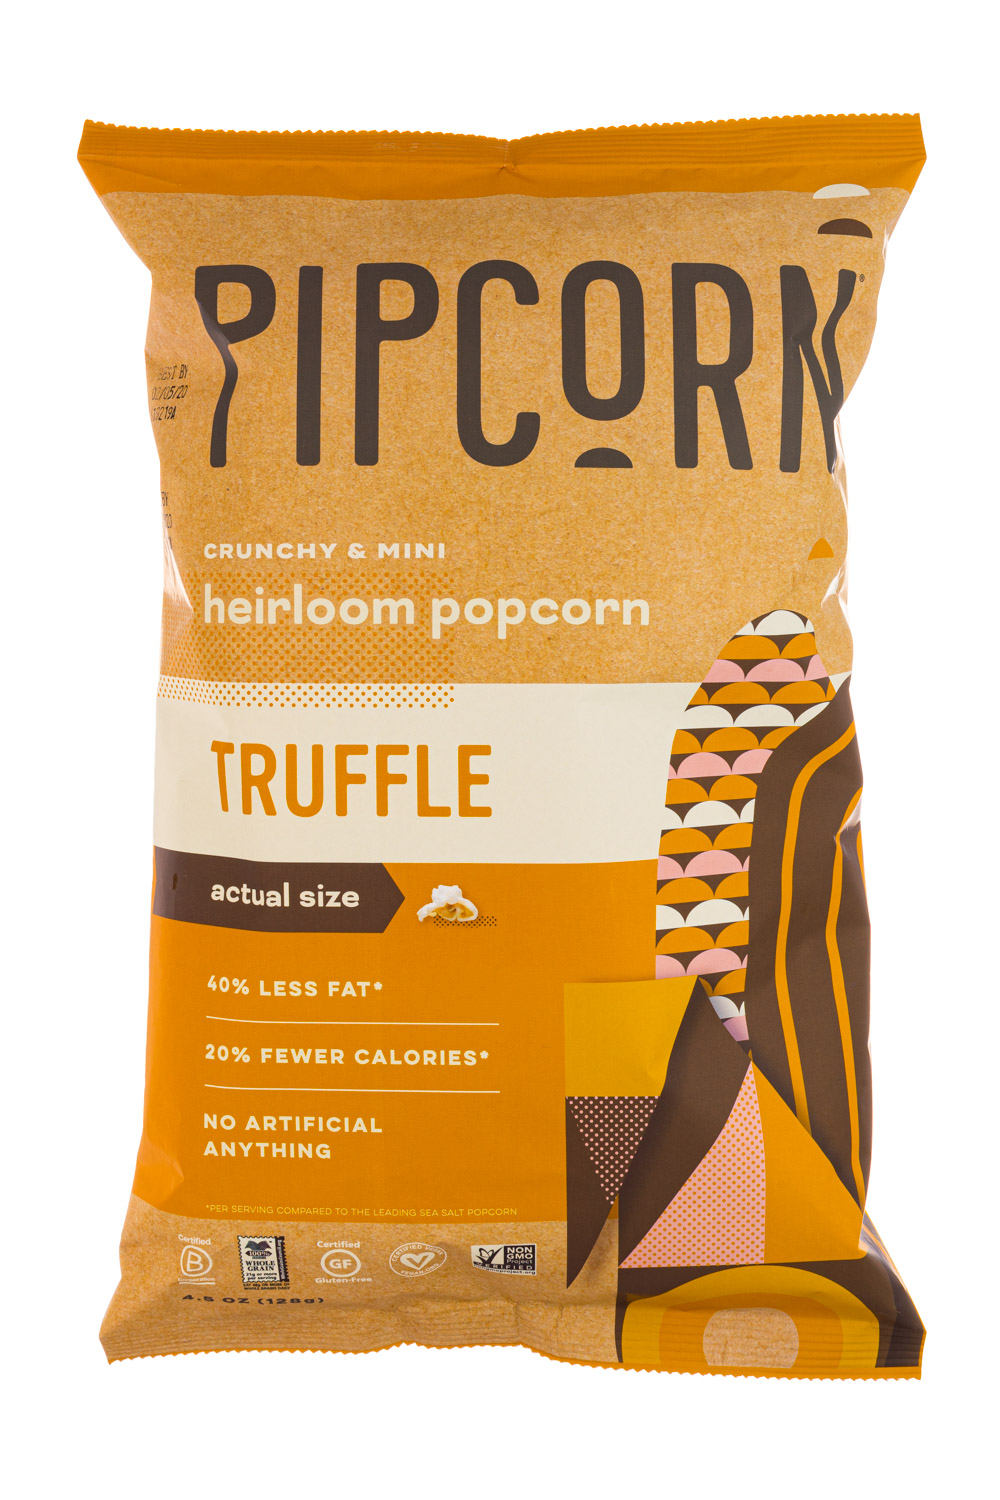 Heirloom Popcorn - Truffle